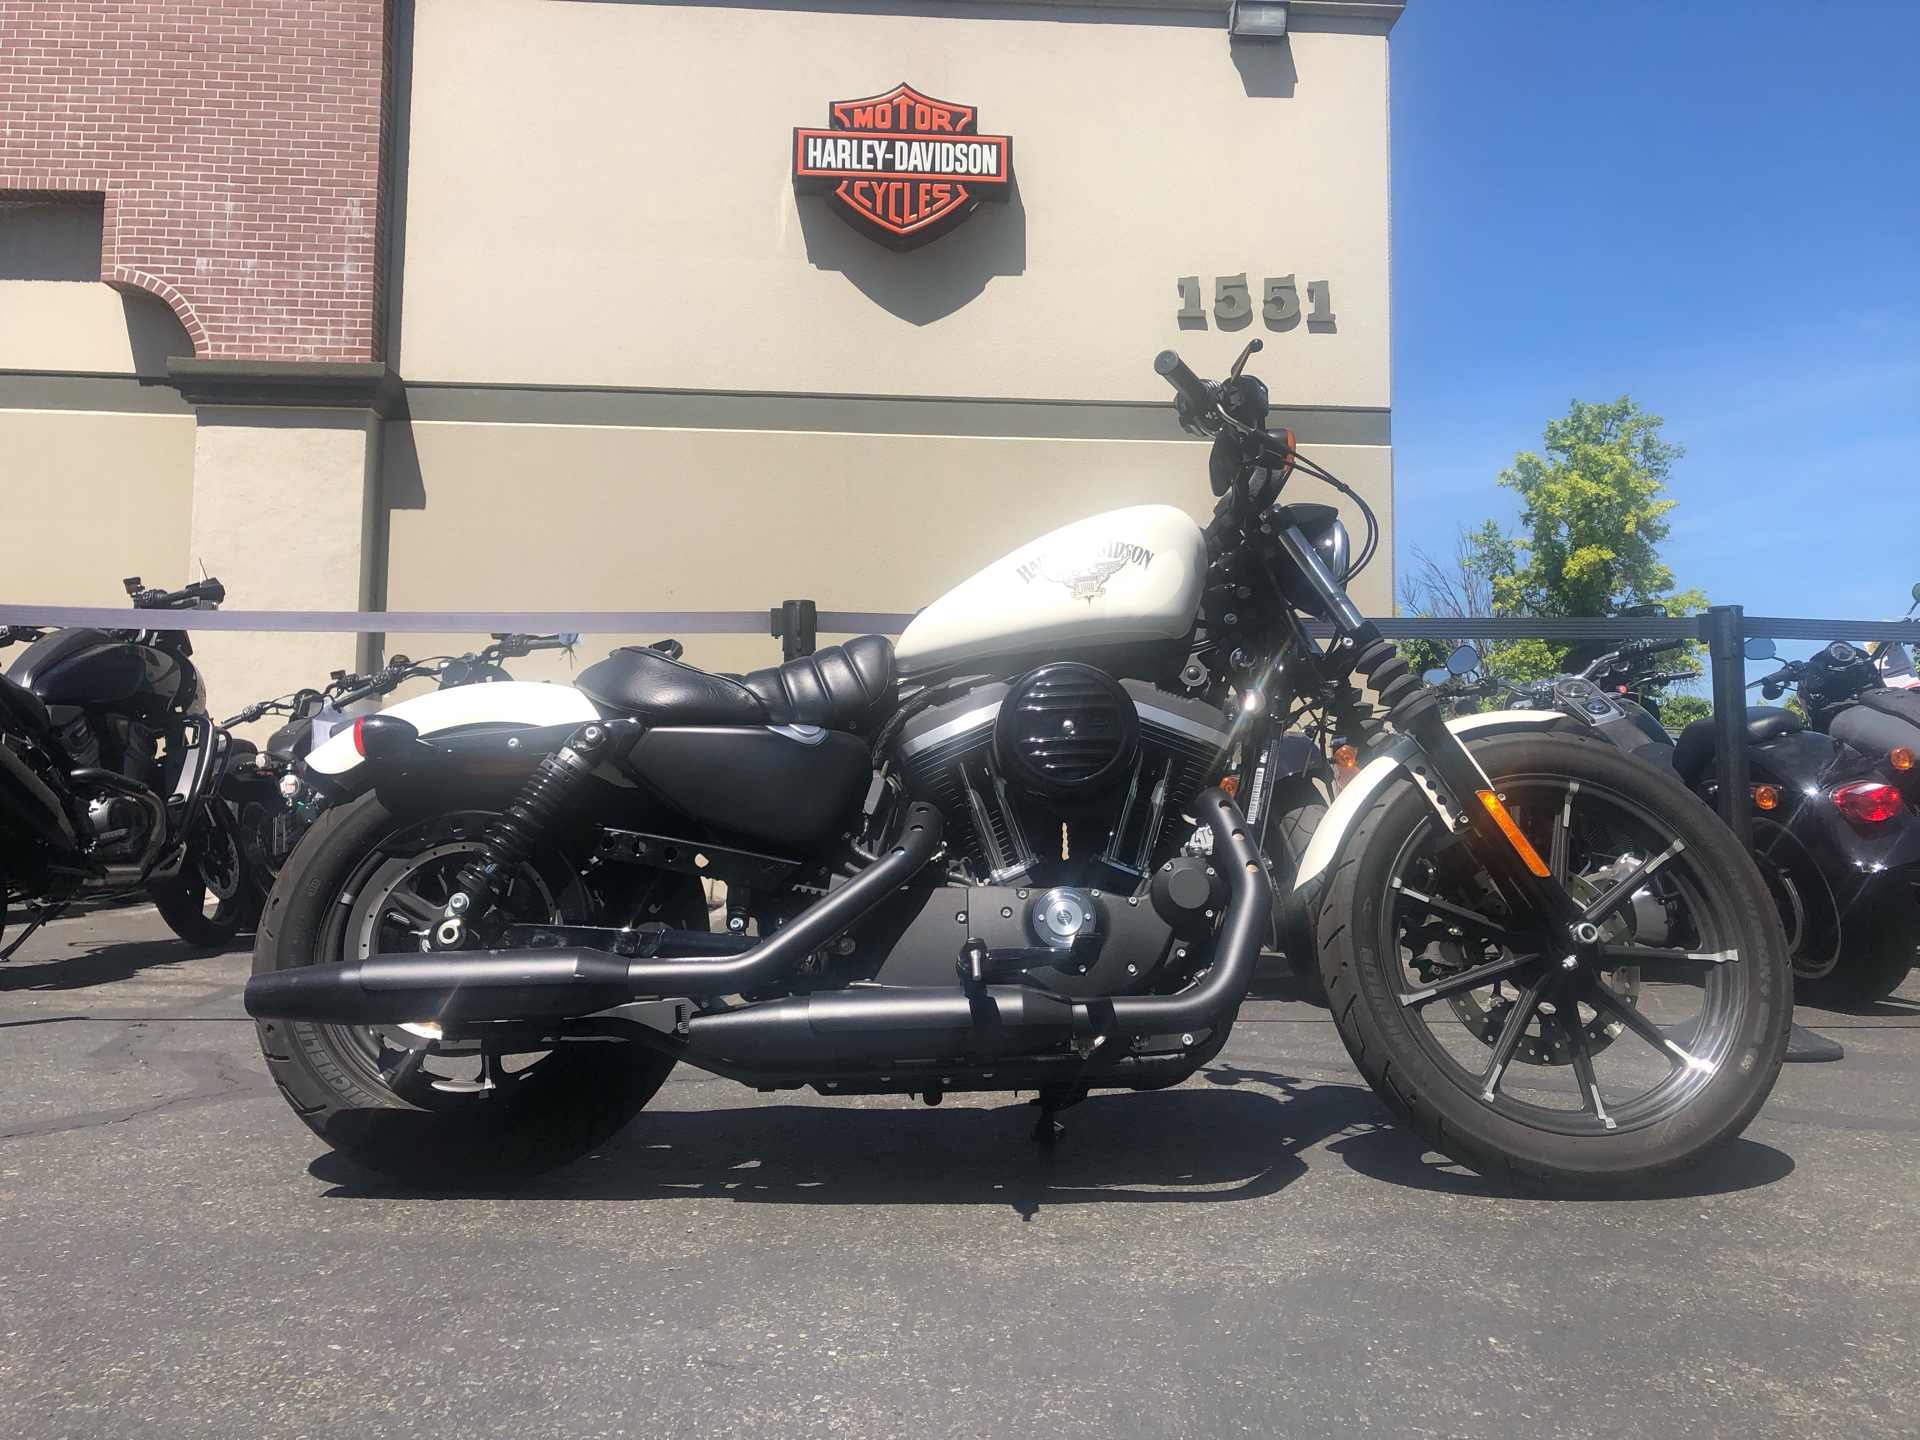 2018 Harley-Davidson Iron 883™ in San Jose, California - Photo 1